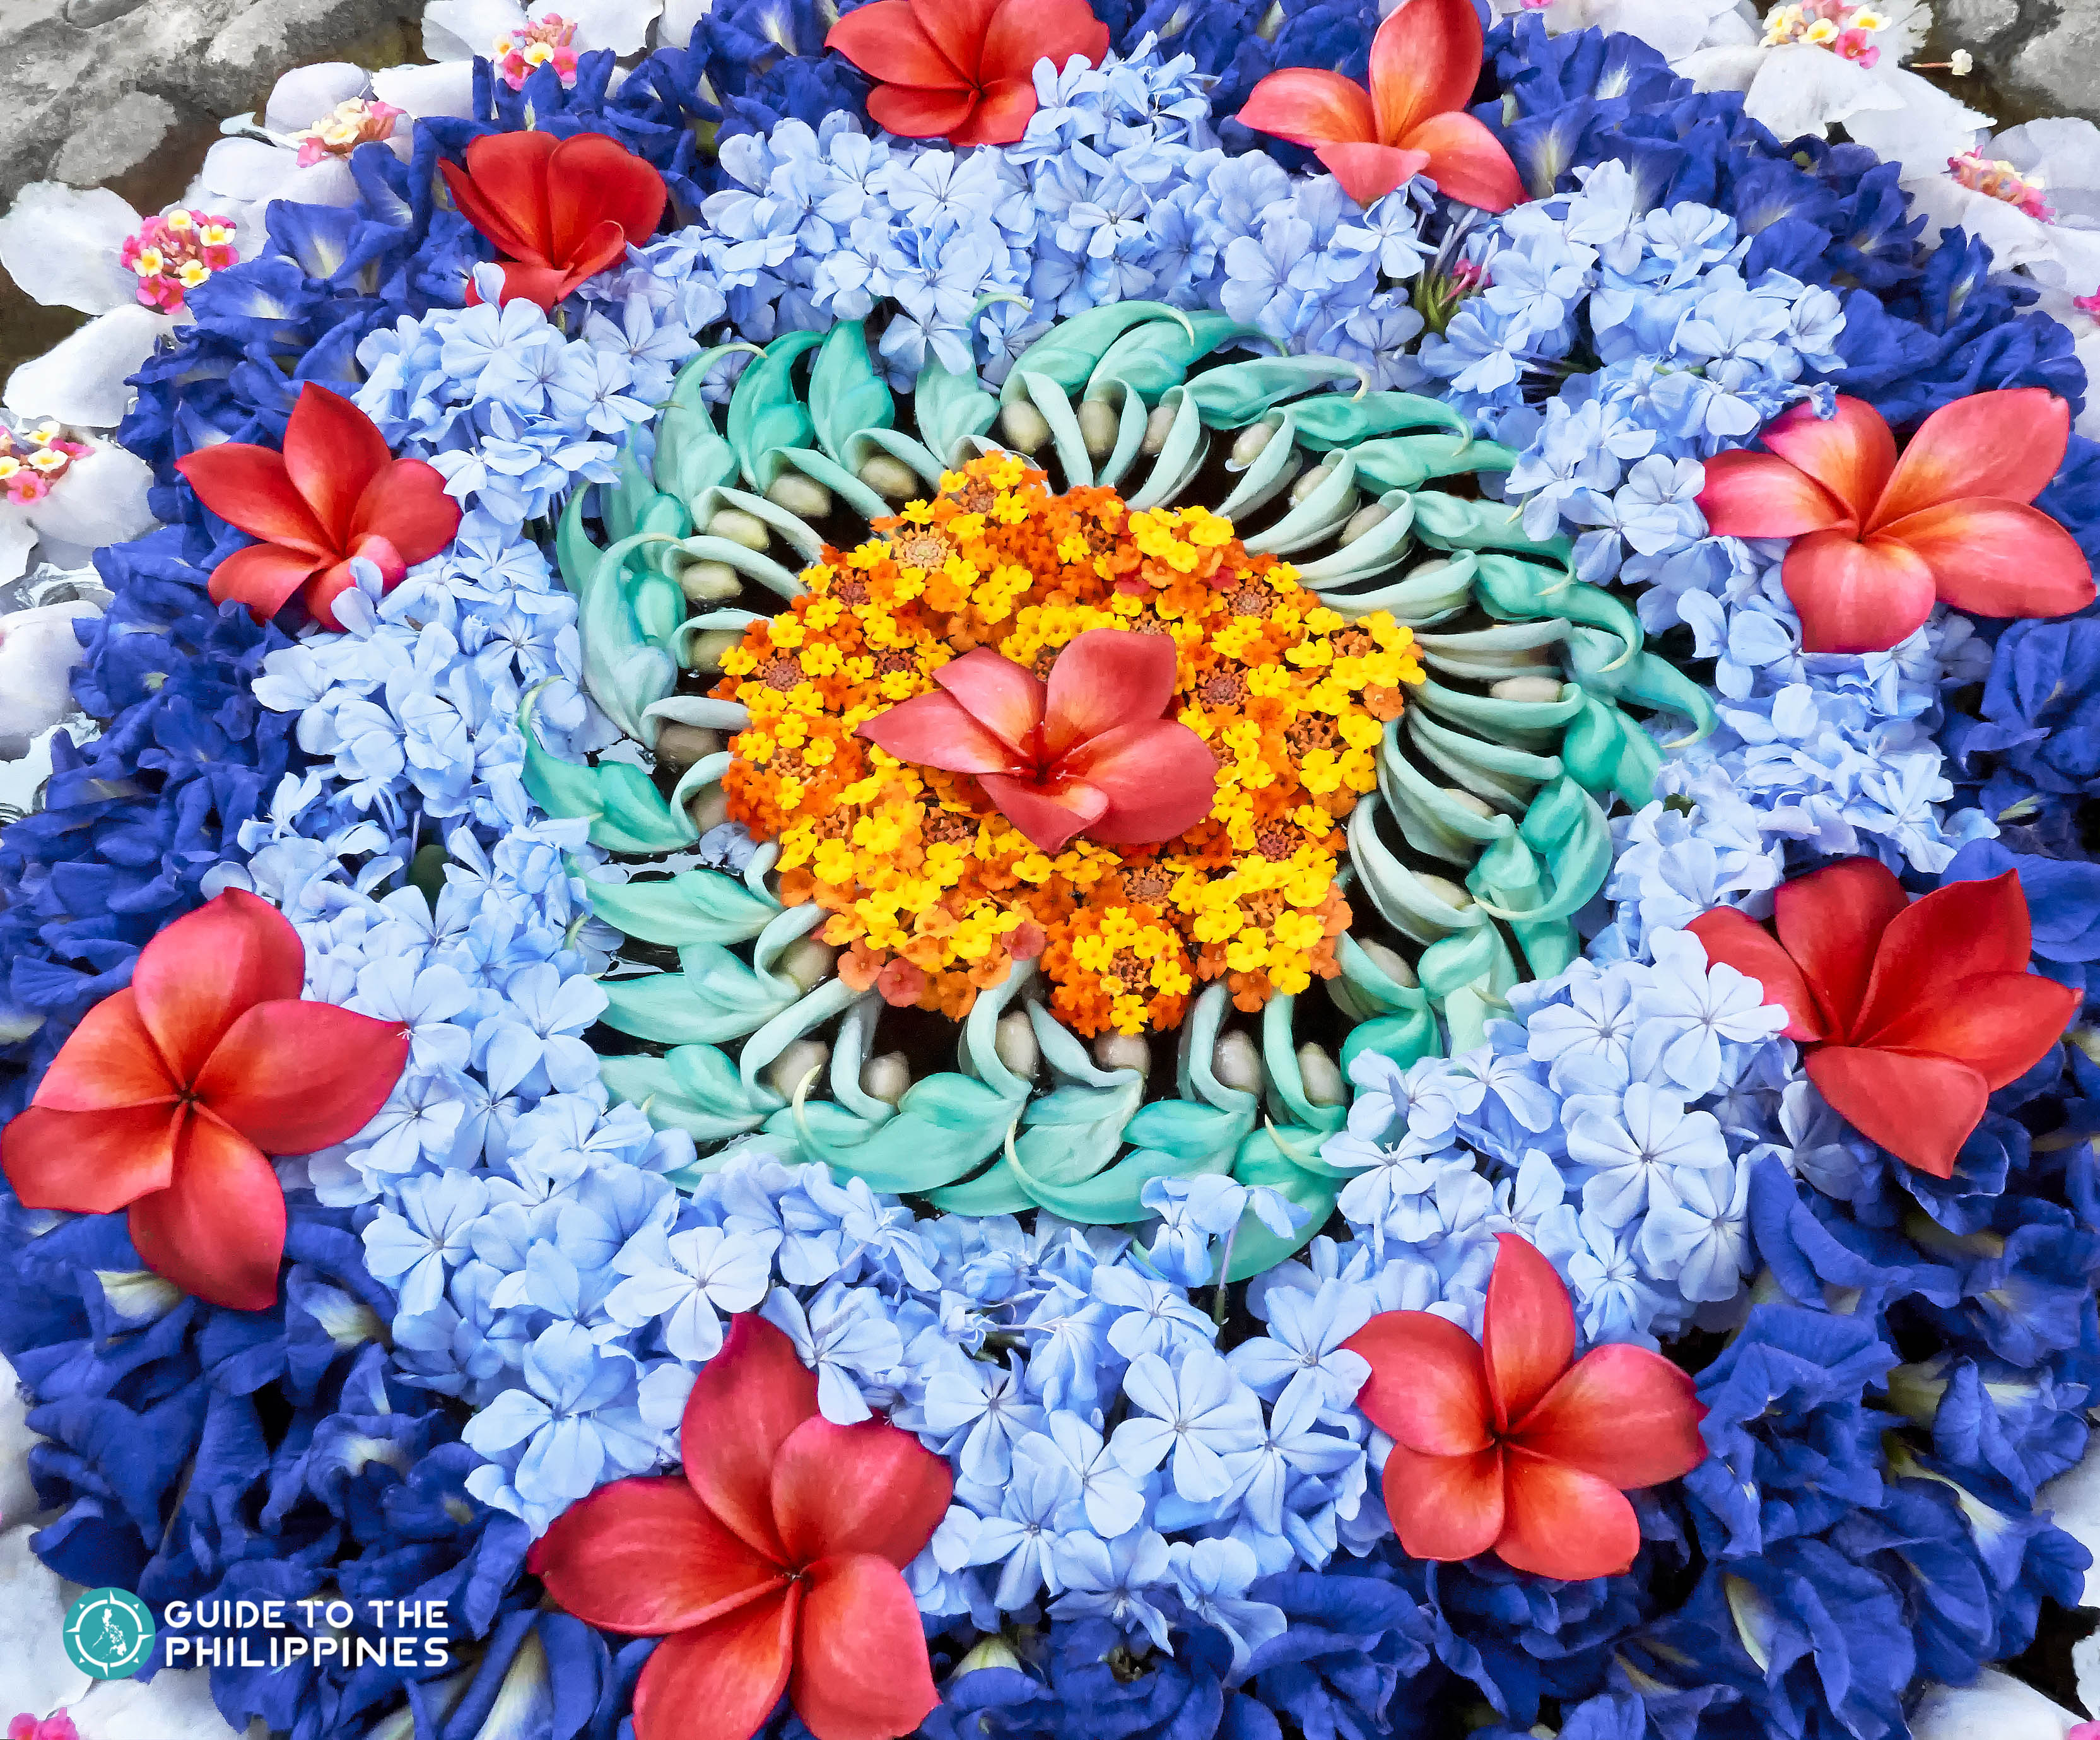 Floral arrangement at Baker's Hill in Puerto Princesa